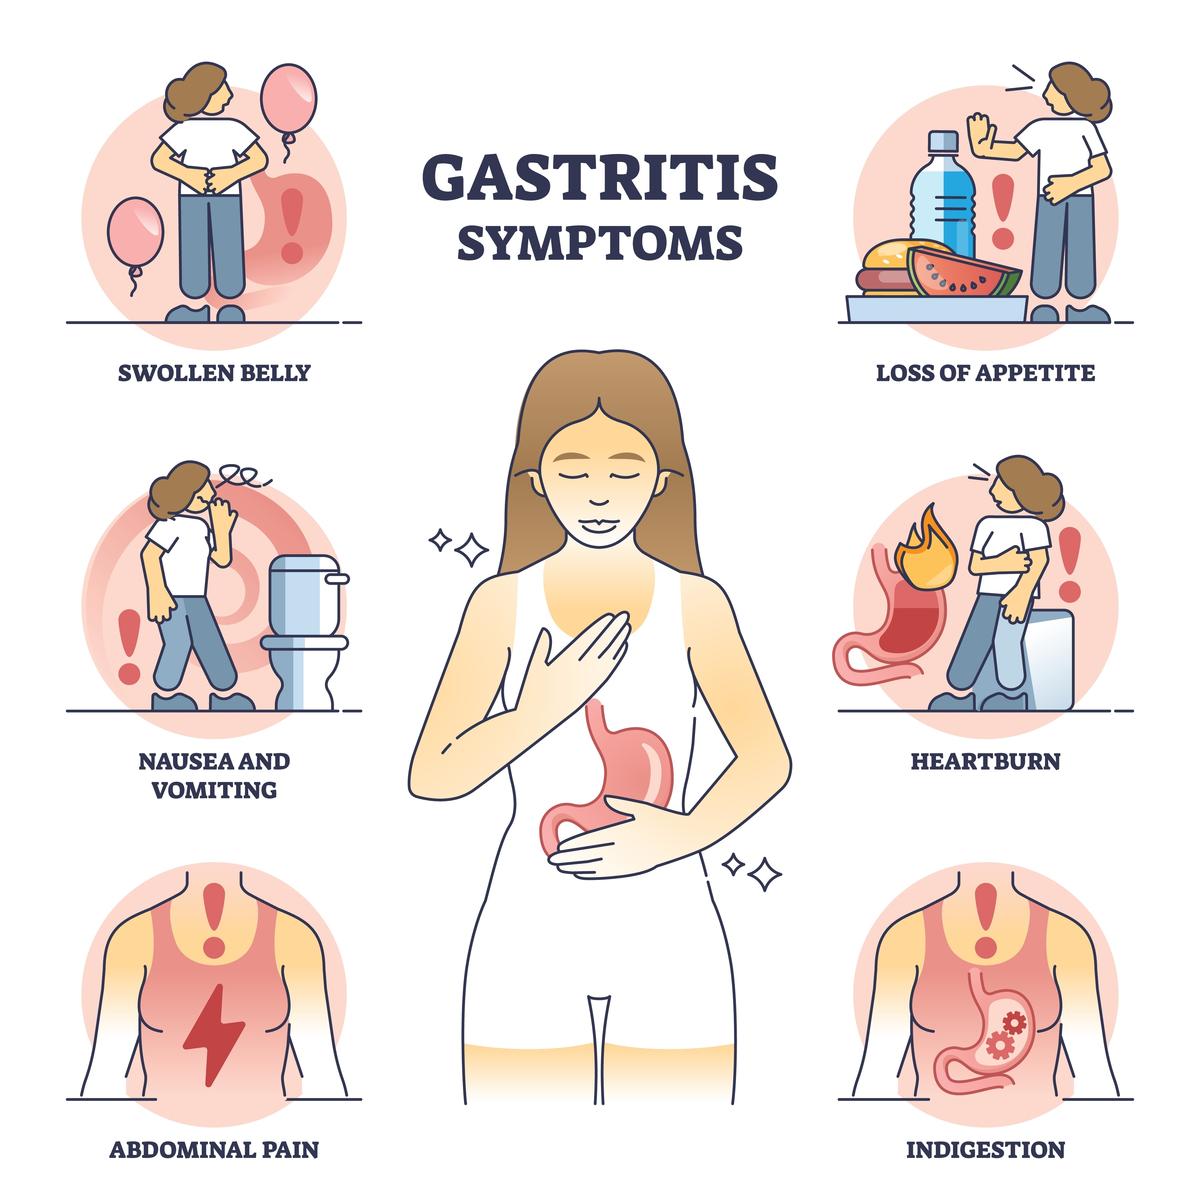 Symptoms of Gastritis